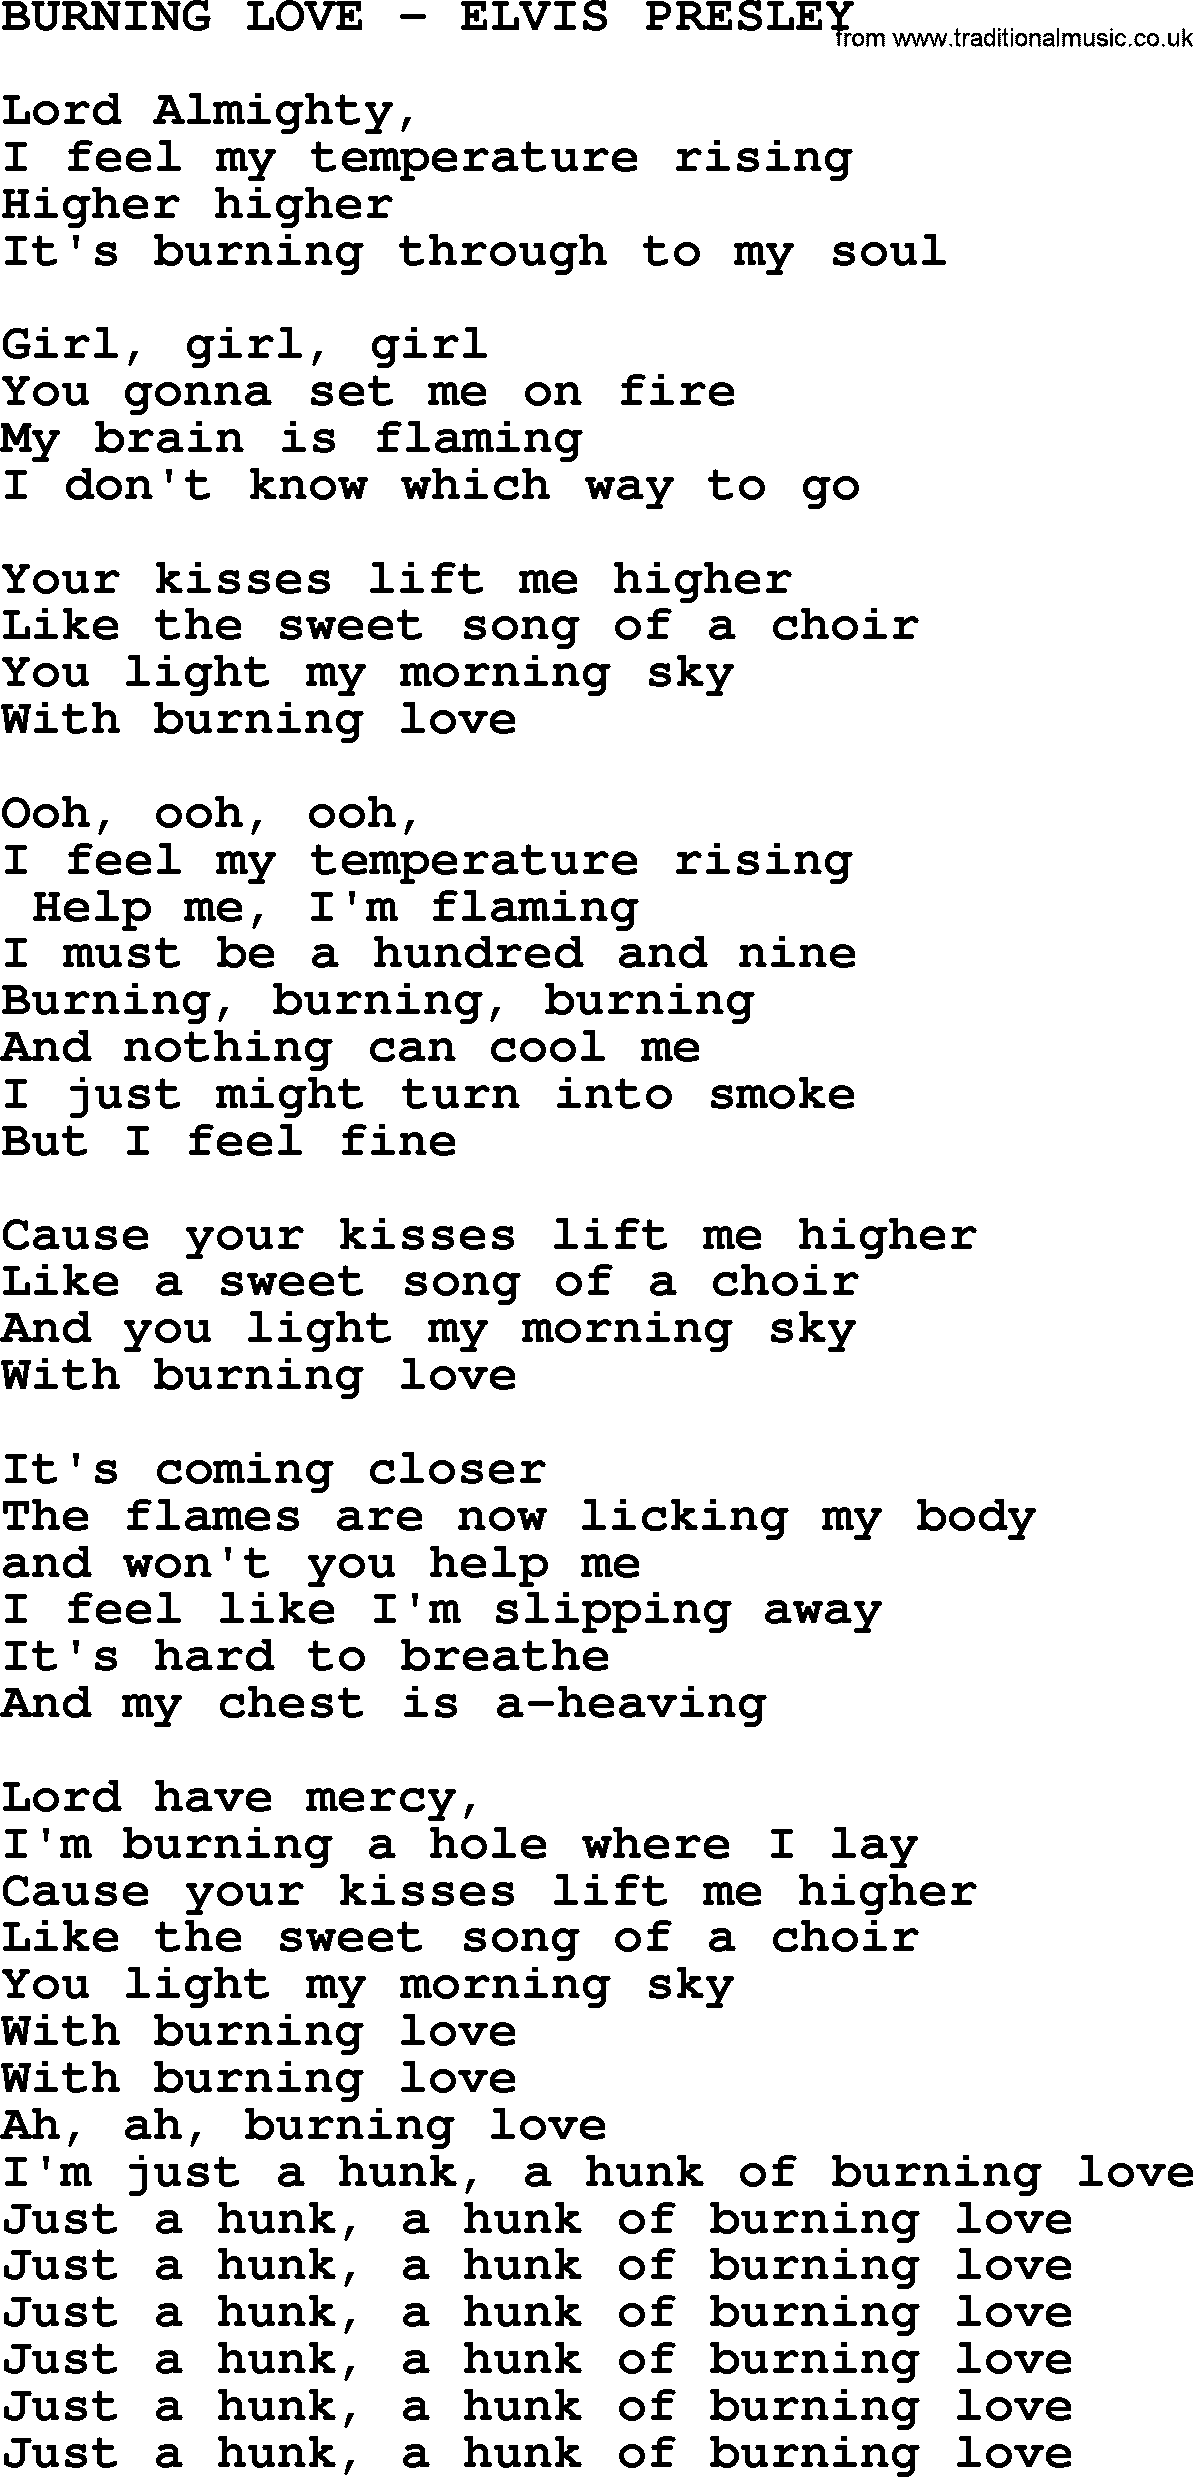 Elvis Presley song: Burning Love-Elvis Presley-.txt lyrics and chords